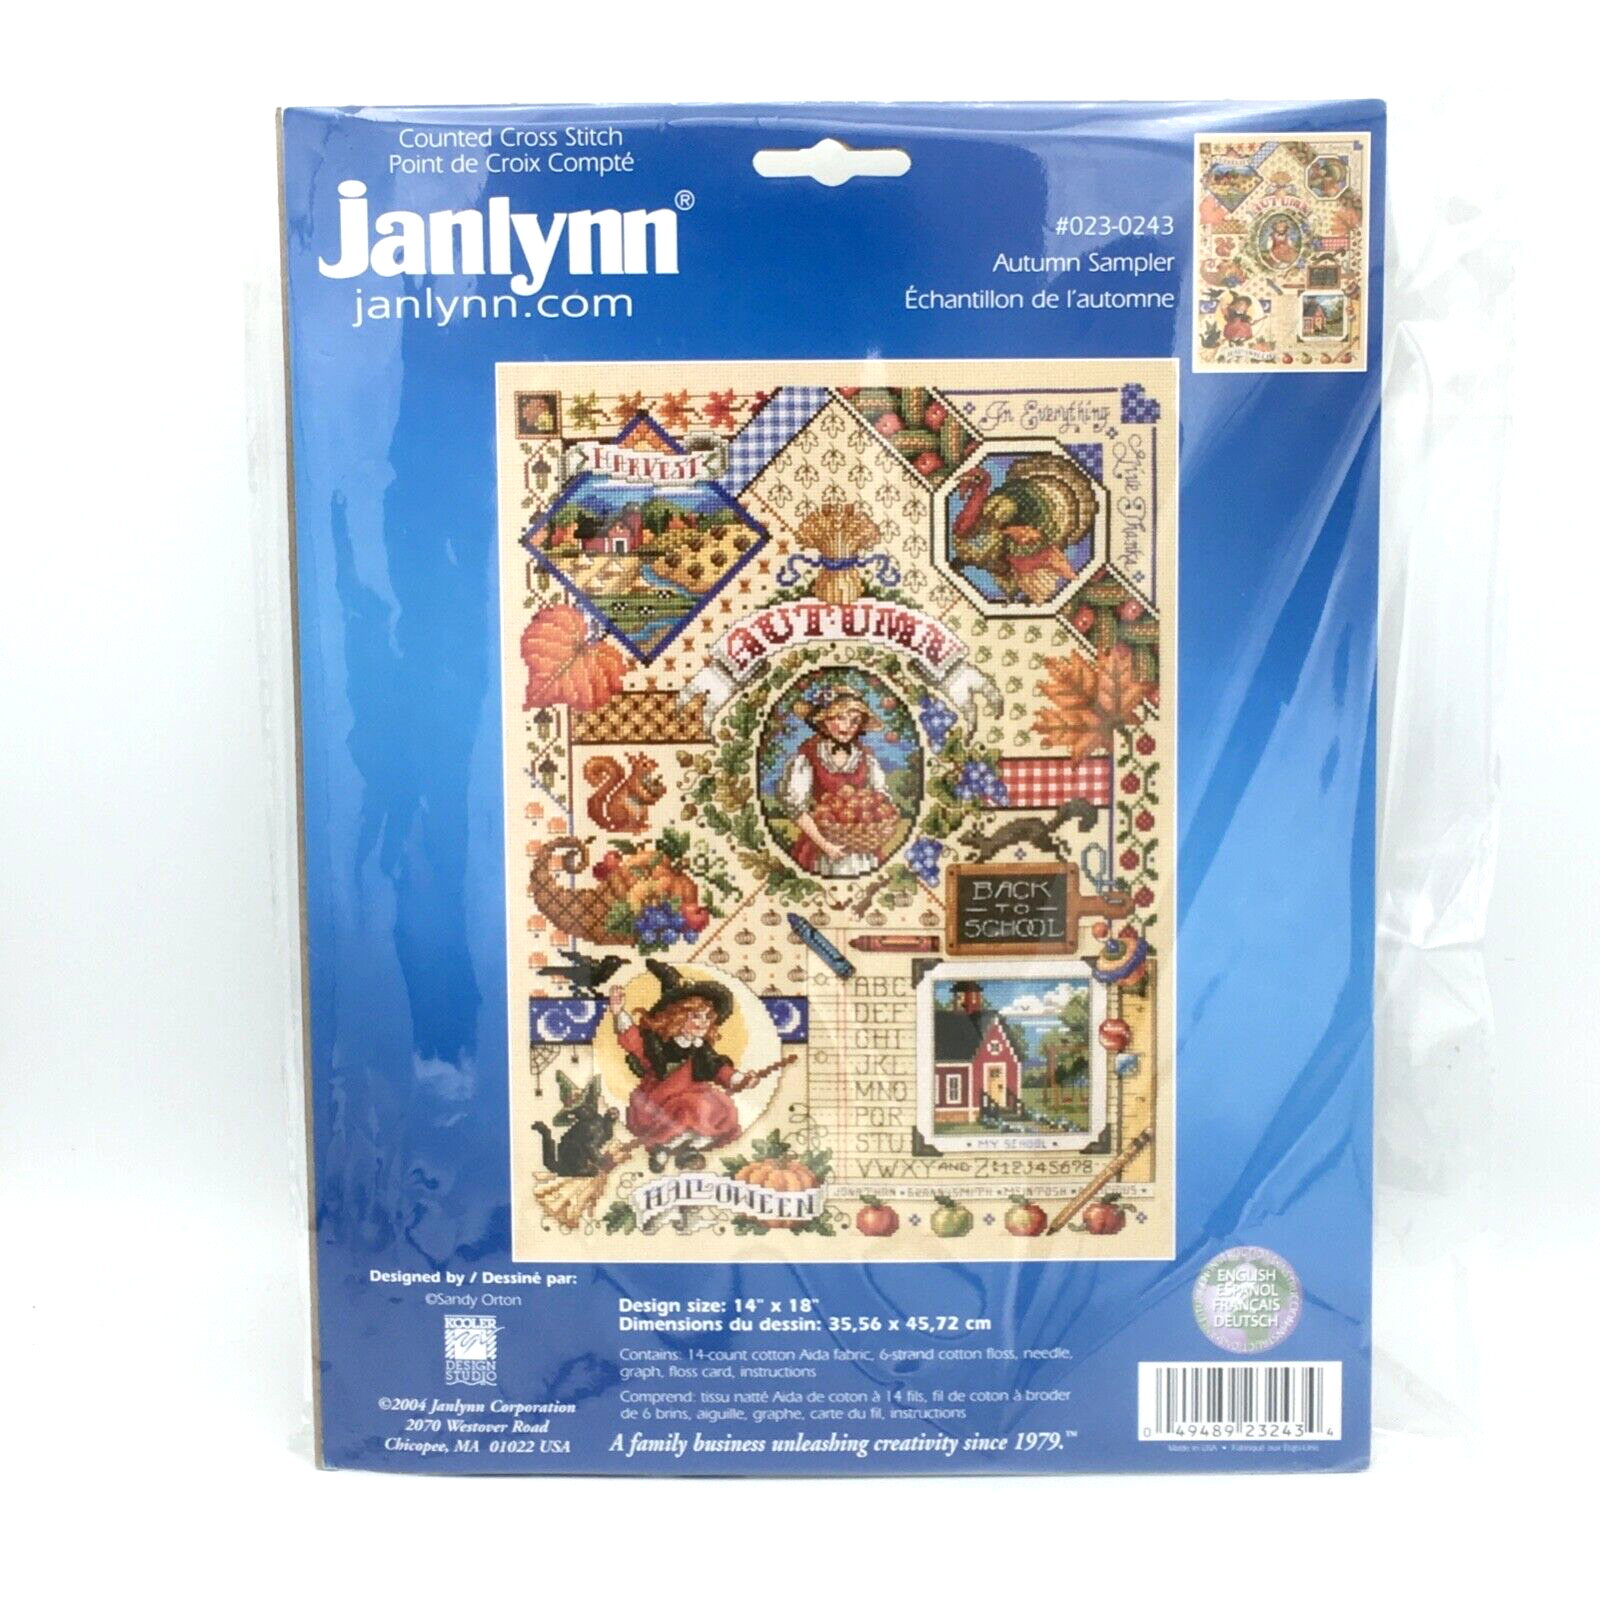 JANYLNN Autumn Sampler 023-0243 counted cross stitch kit - Halloween 14x18" Aida - $50.00